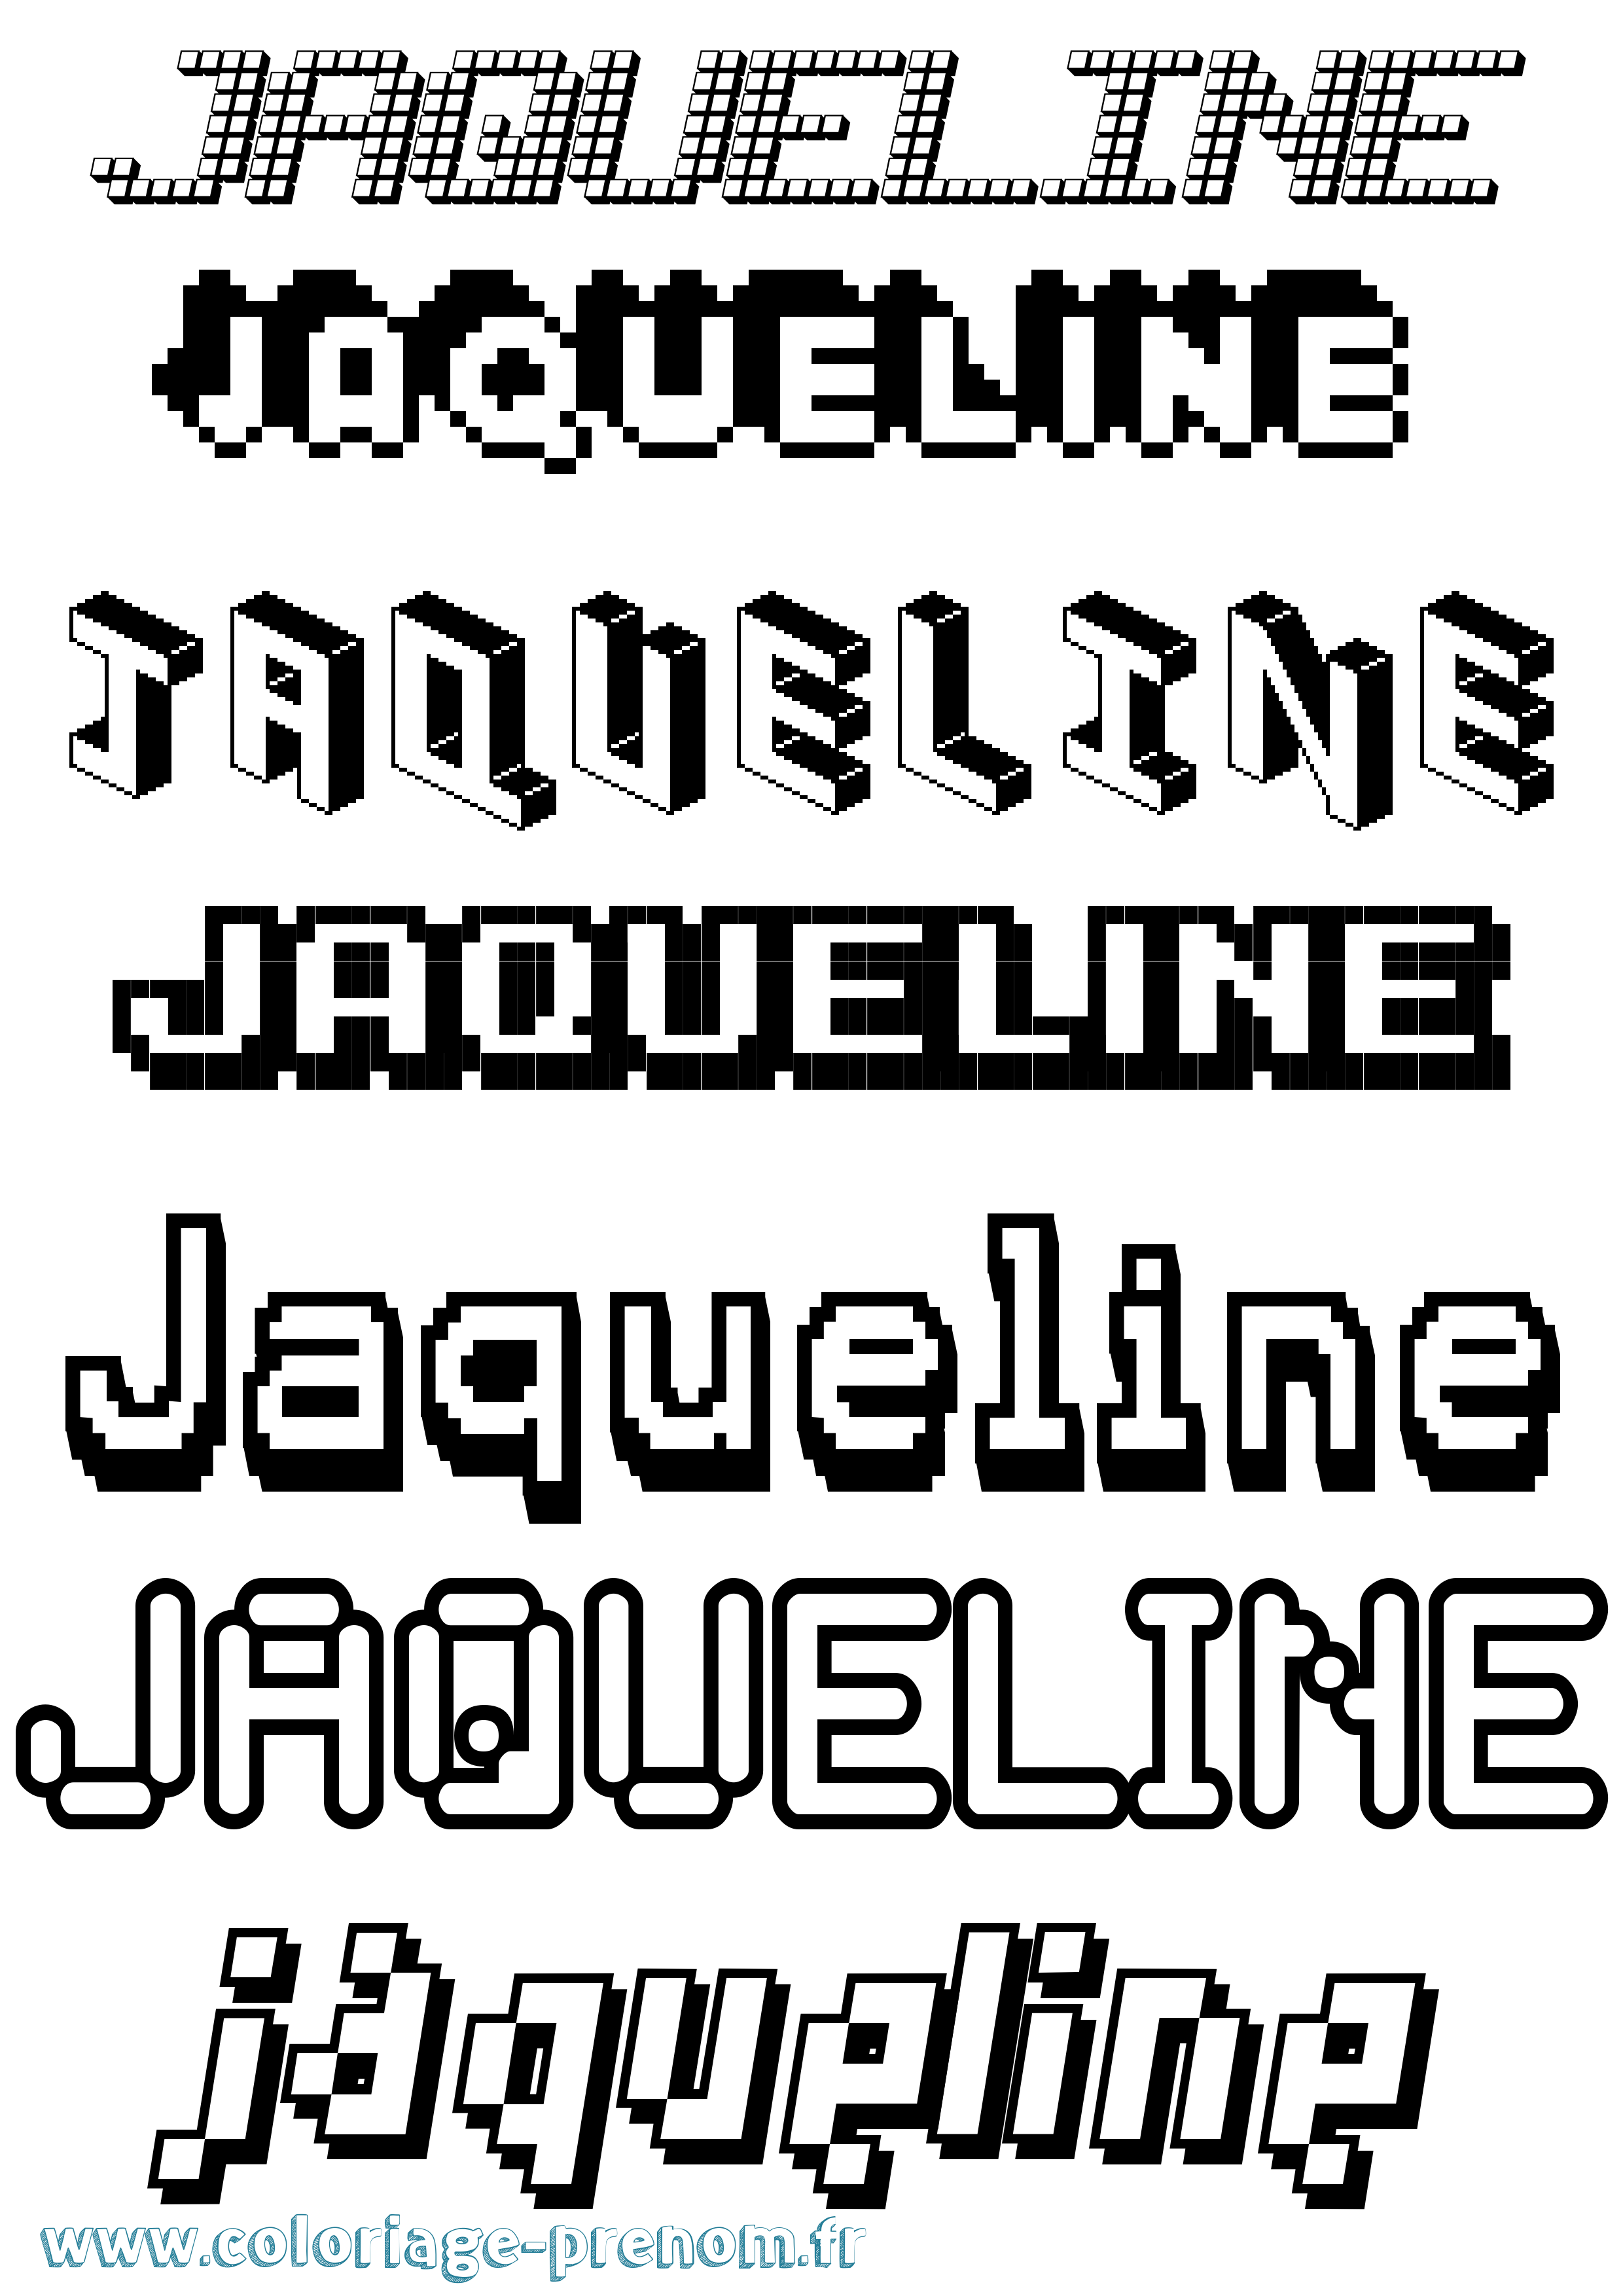 Coloriage prénom Jaqueline Pixel